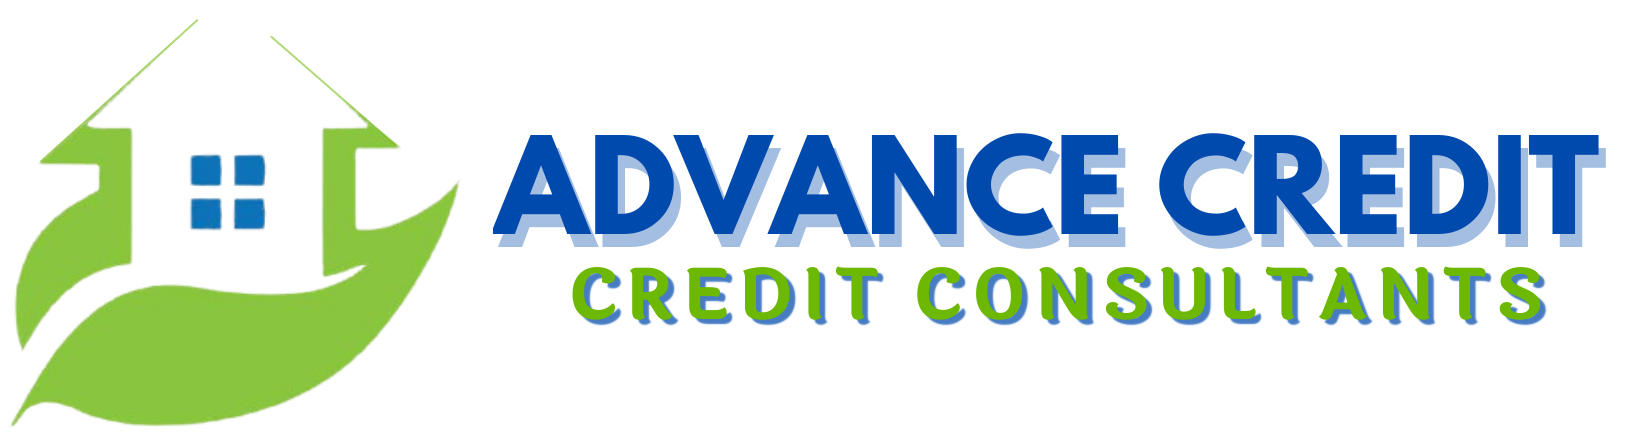 Advance Credit